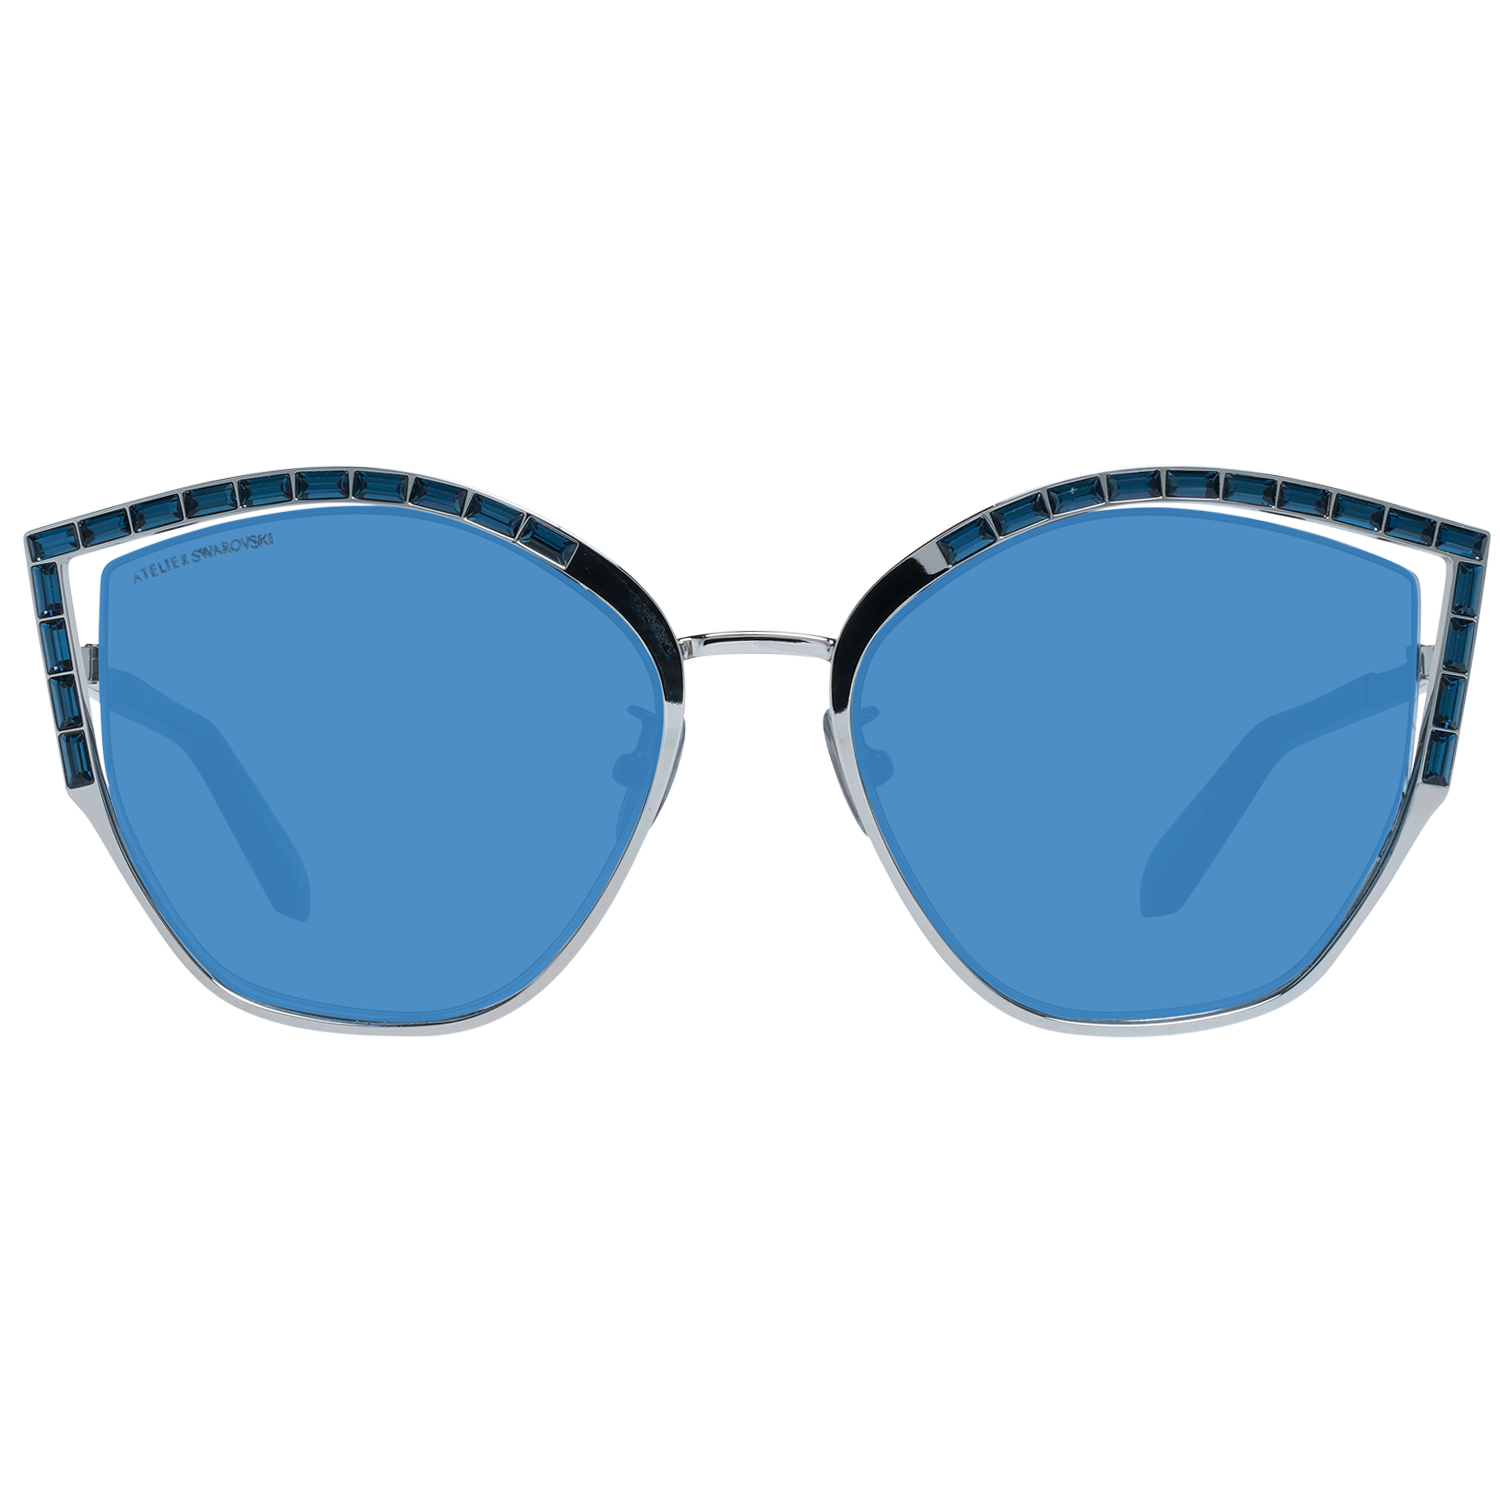 Atelier Swarovski Sunglasses Atelier Swarovski Sunglasses SK0274-P-H 56 16W Eyeglasses Eyewear UK USA Australia 